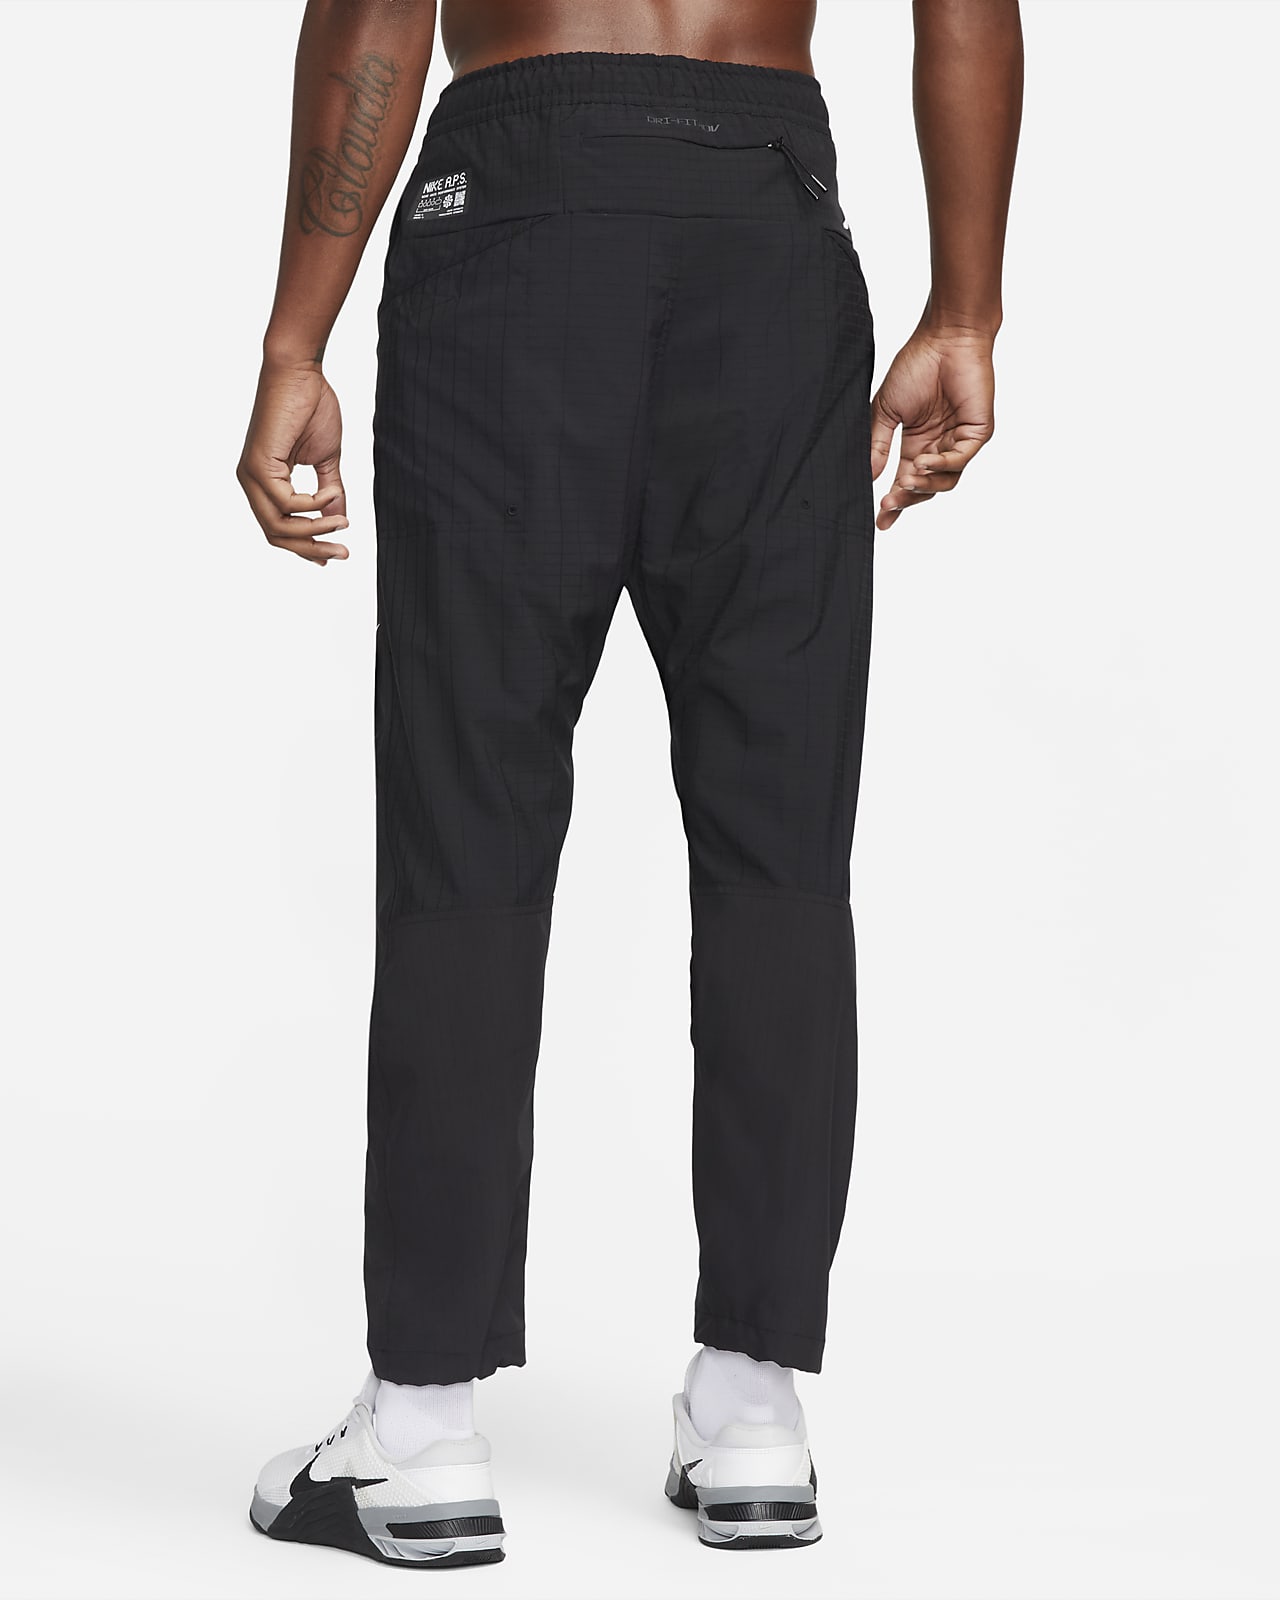 Nike | Dri-FIT Unlimited Men's Tapered Training Pants | Grey/Black |  SportsDirect.com